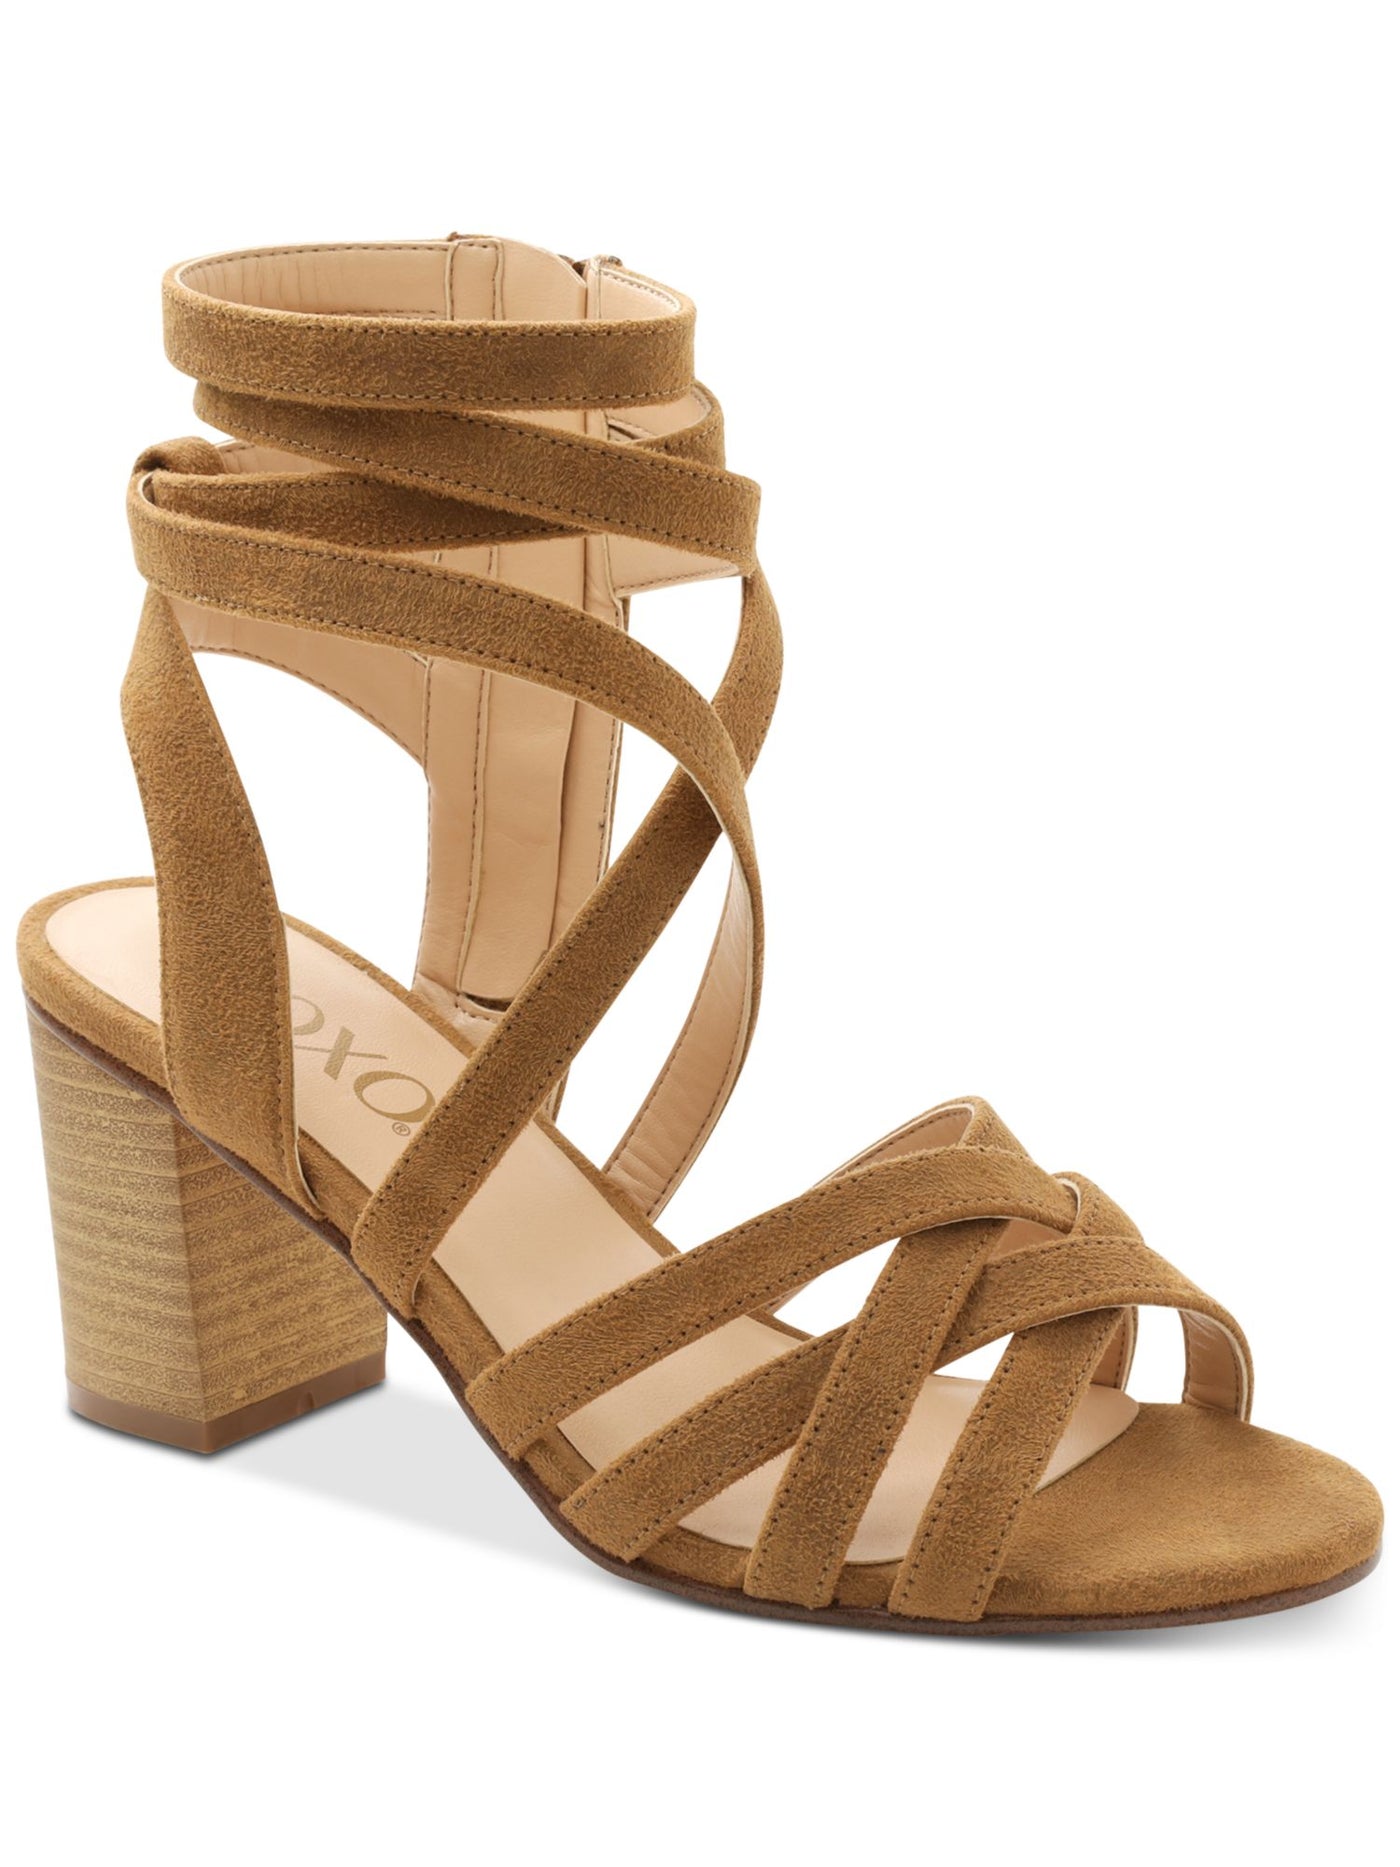 XOXO Womens Beige Padded Strappy Eden Round Toe Block Heel Zip-Up Dress Sandals Shoes 6.5 M